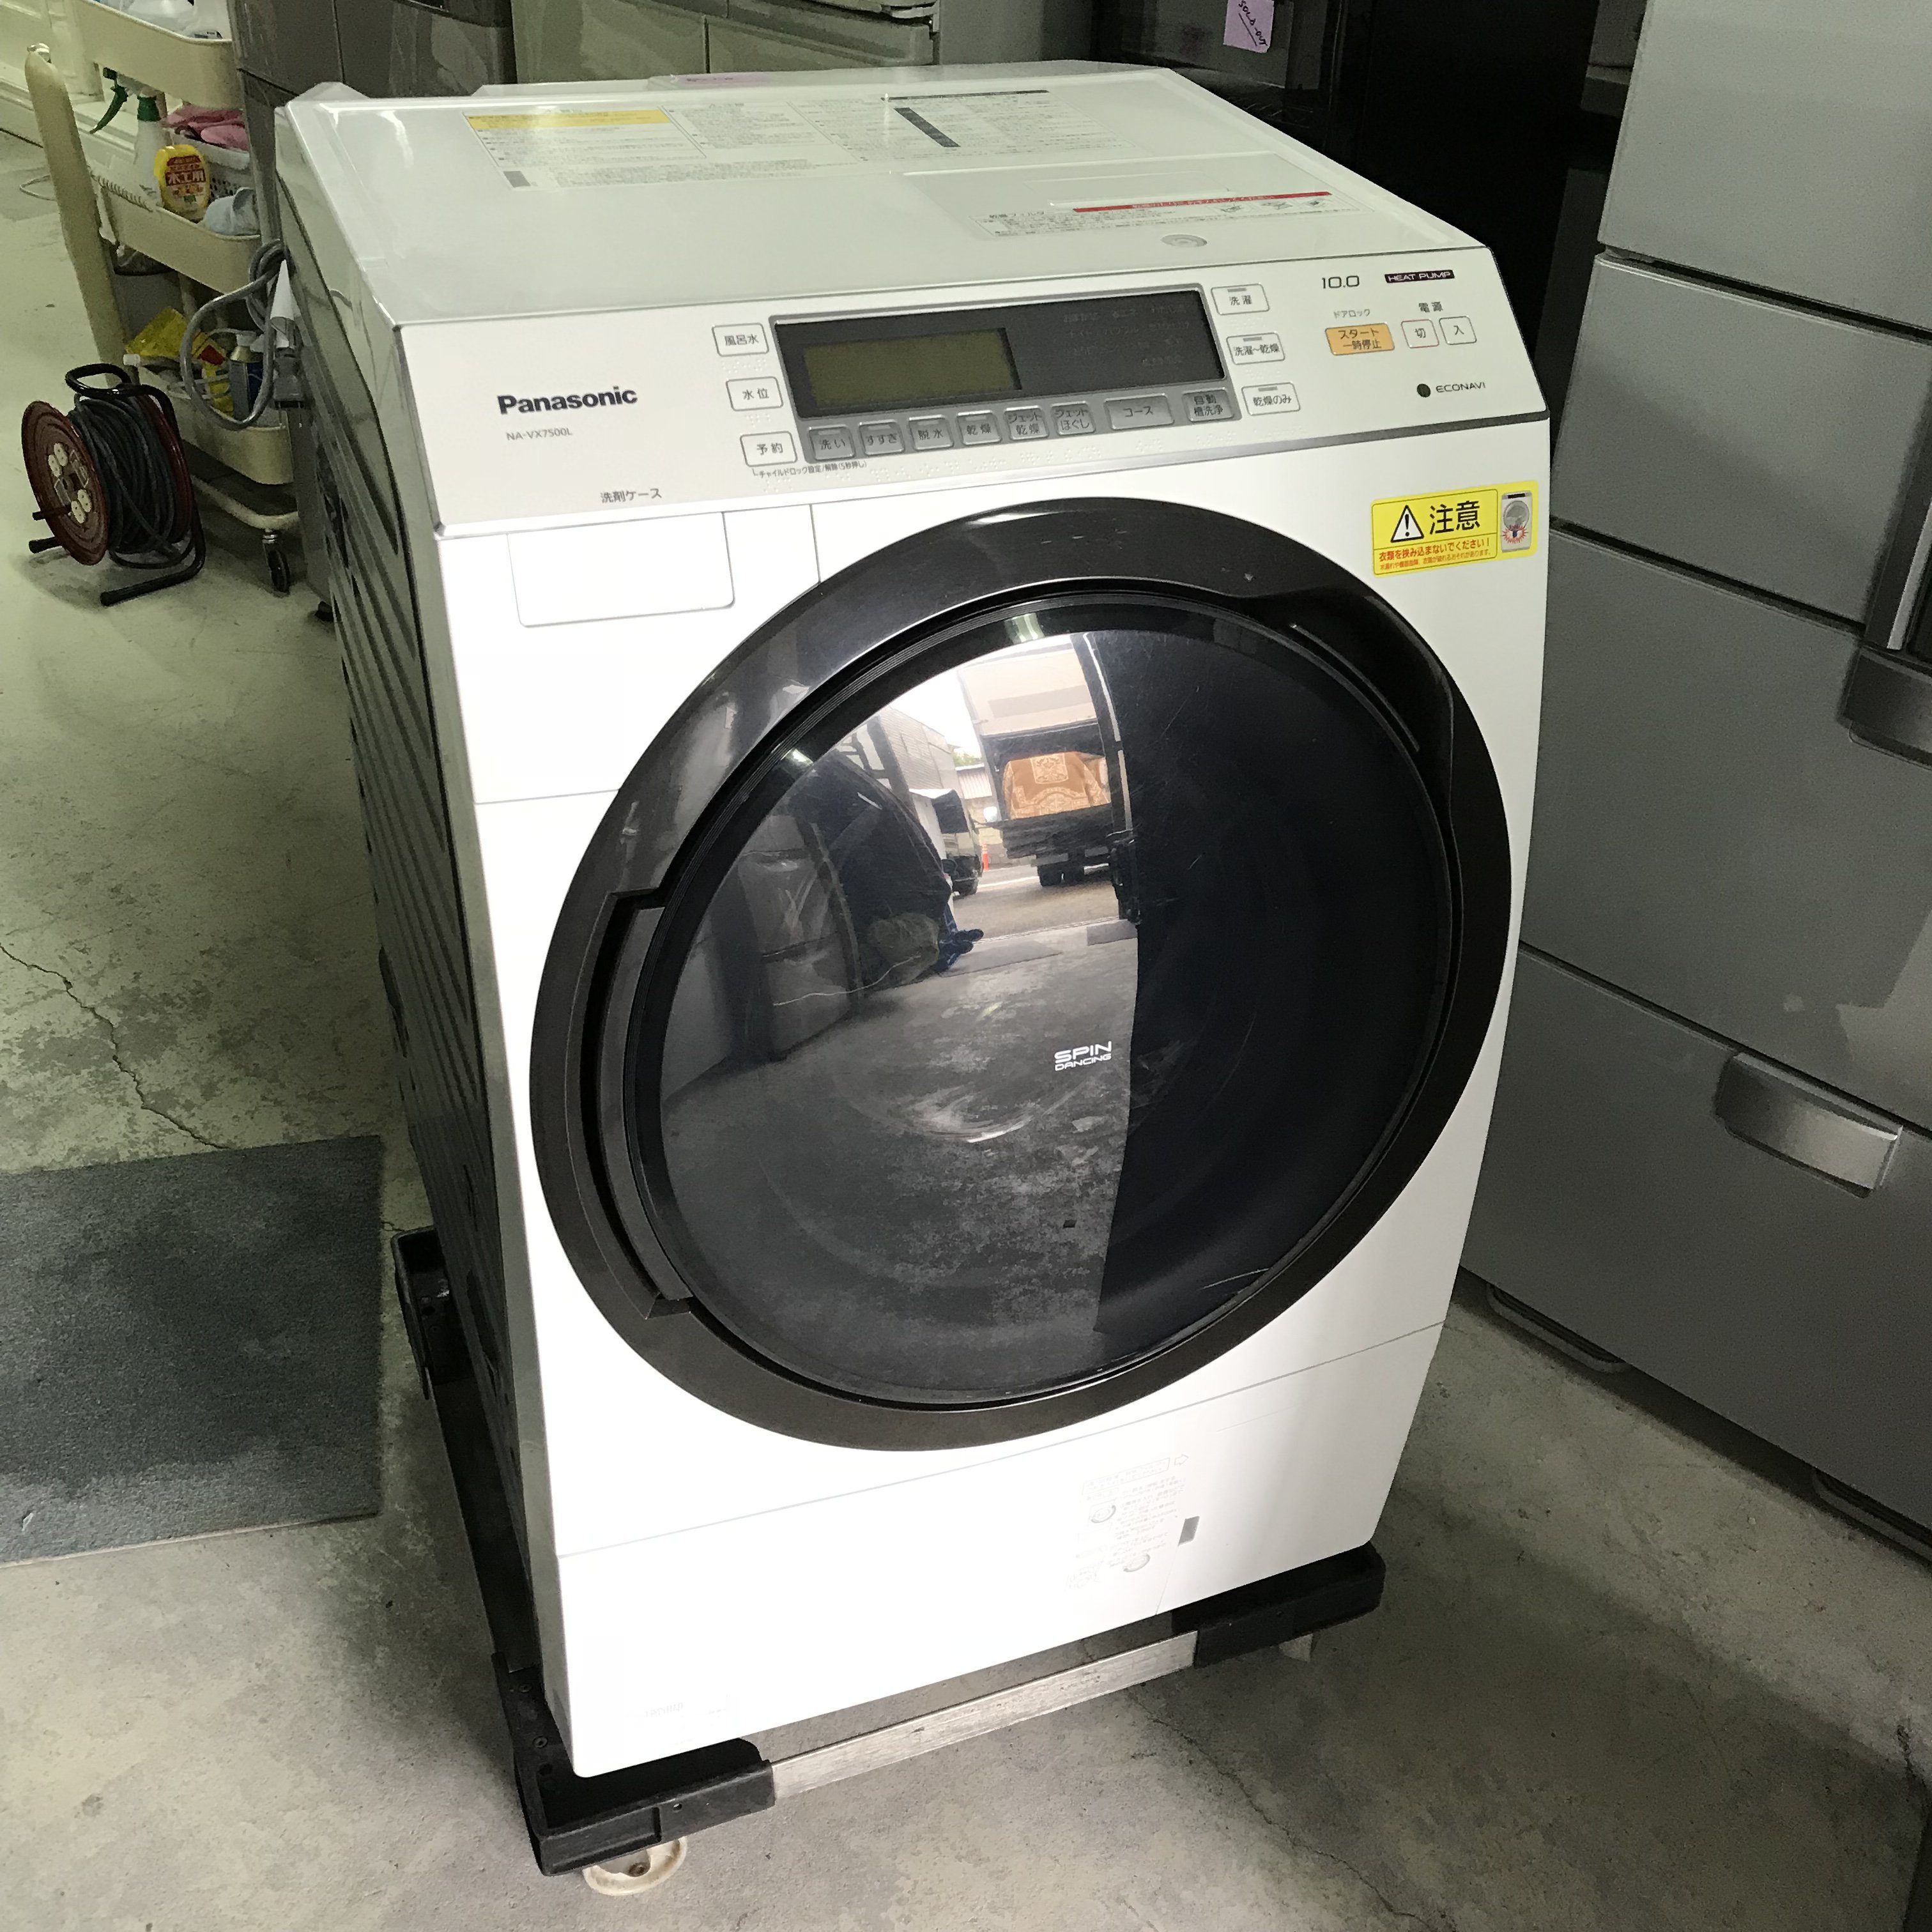 Panasonicドラム洗濯機10kを買い取りました！ | 買取実績【買取りき】